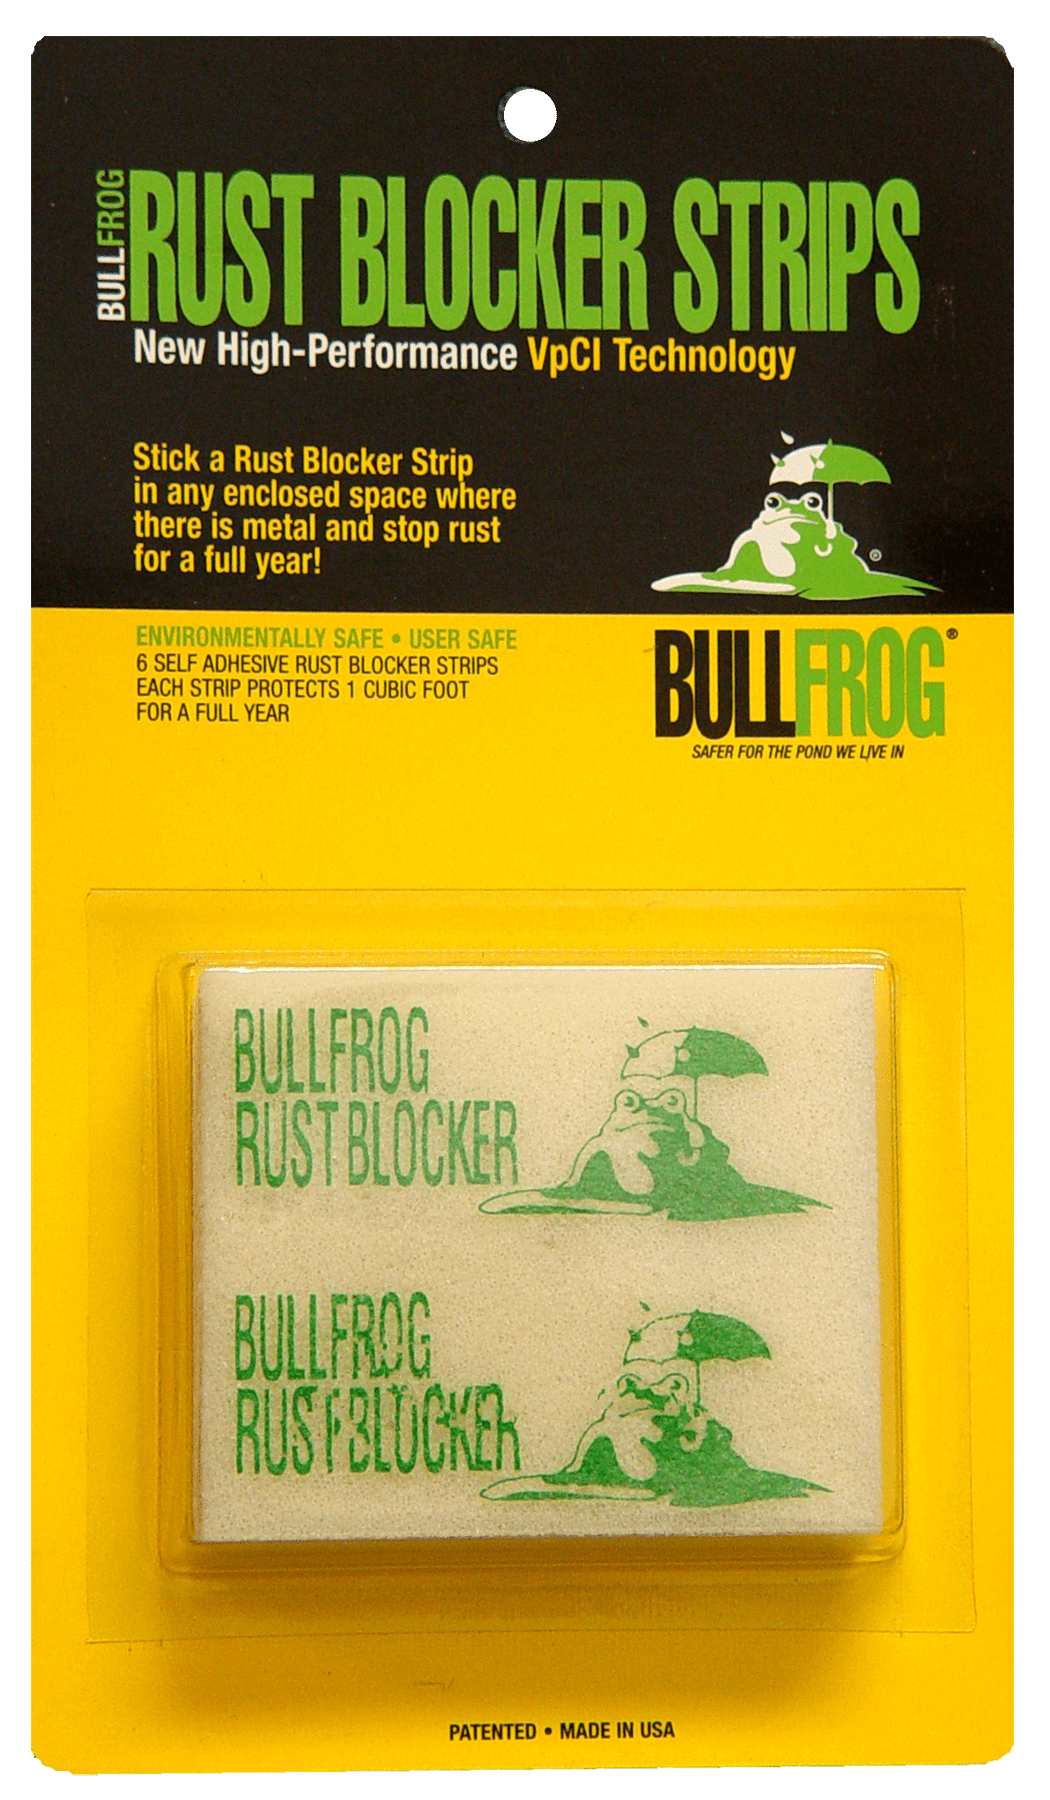 Bull Frog Bull Frog Rust Blocker, Bull Frog 35191016 Rust Blocker Emitter Strip  6pk Gun Care